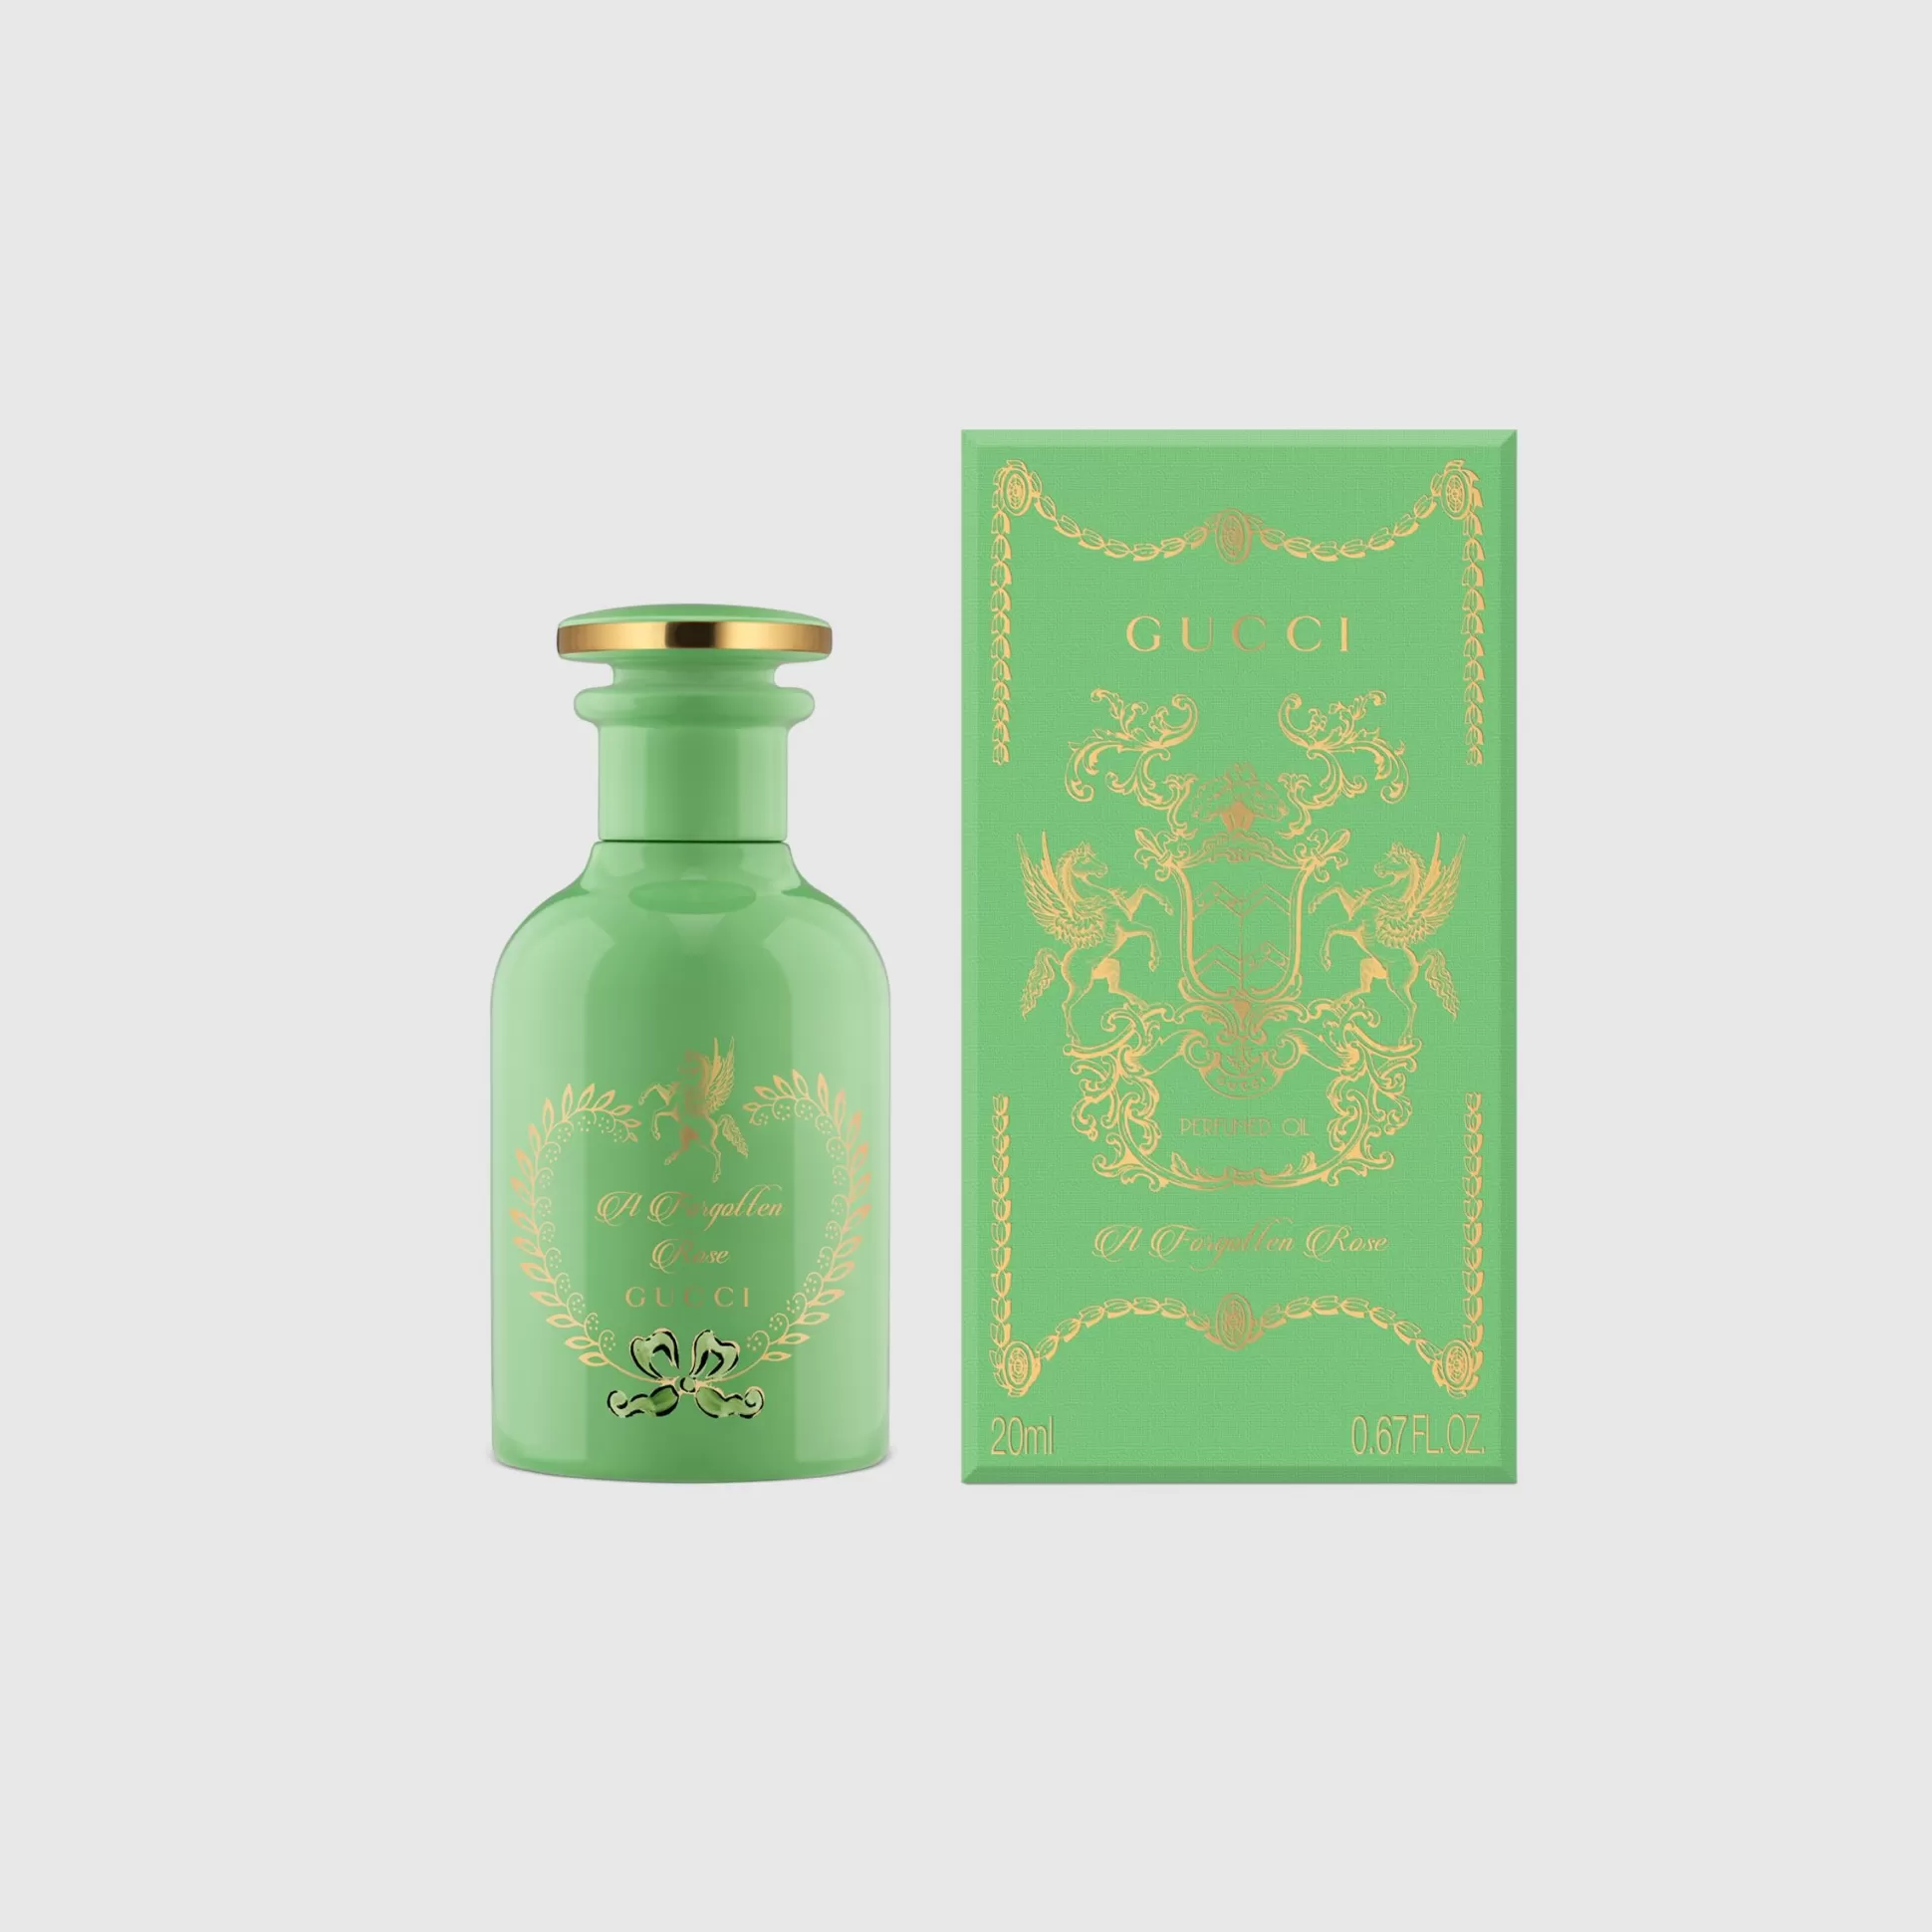 GUCCI The Alchemist'S Garden, A Forgotten Rose, 20Ml, Perfumed Oil- Men'S Fragrances